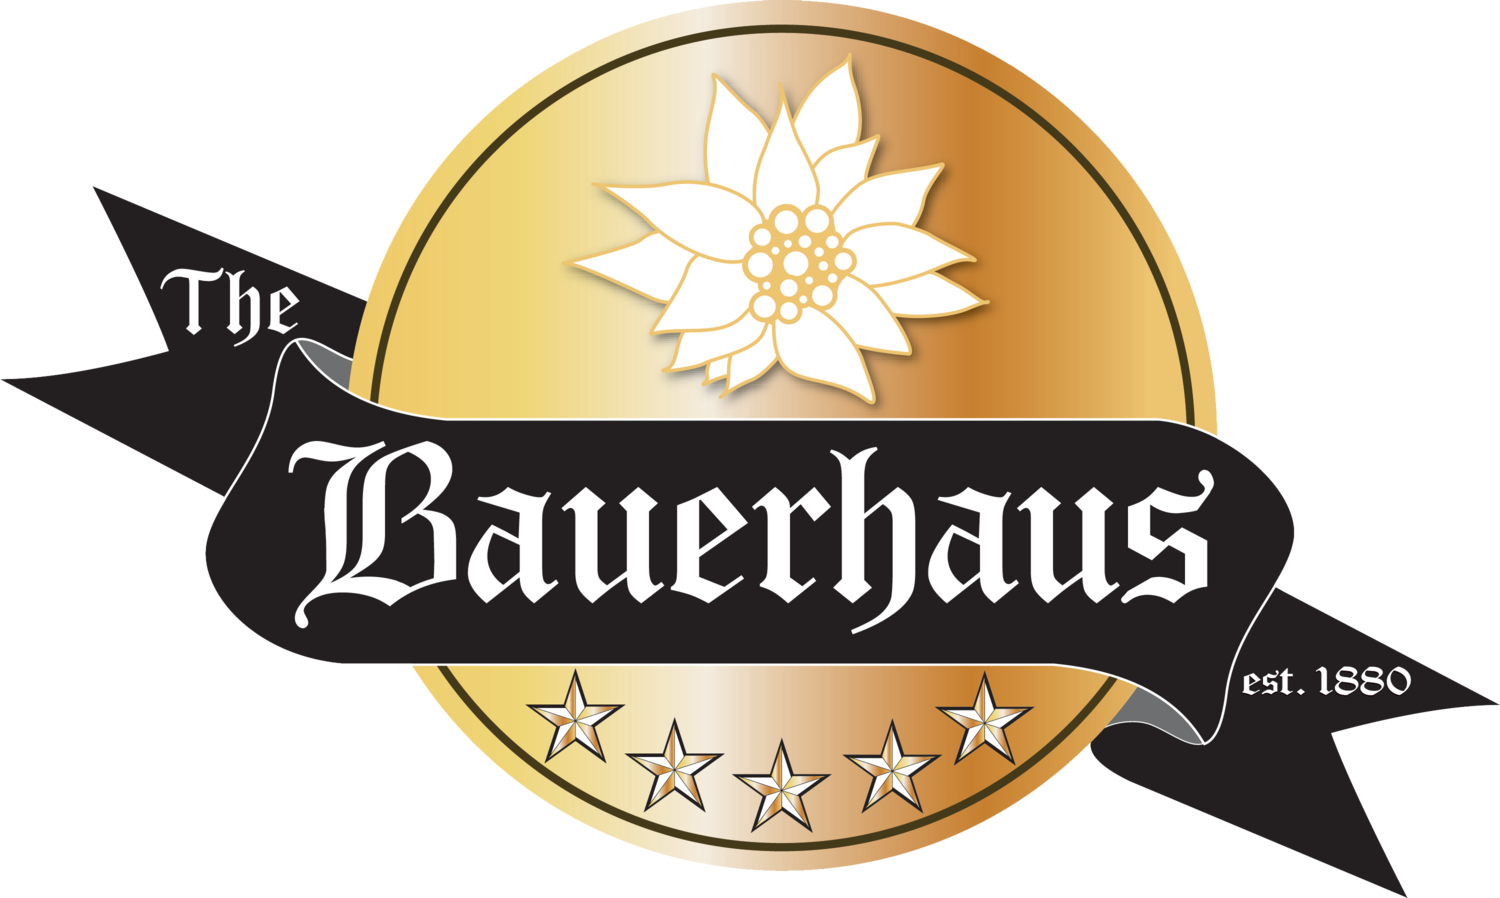 The Bauerhaus